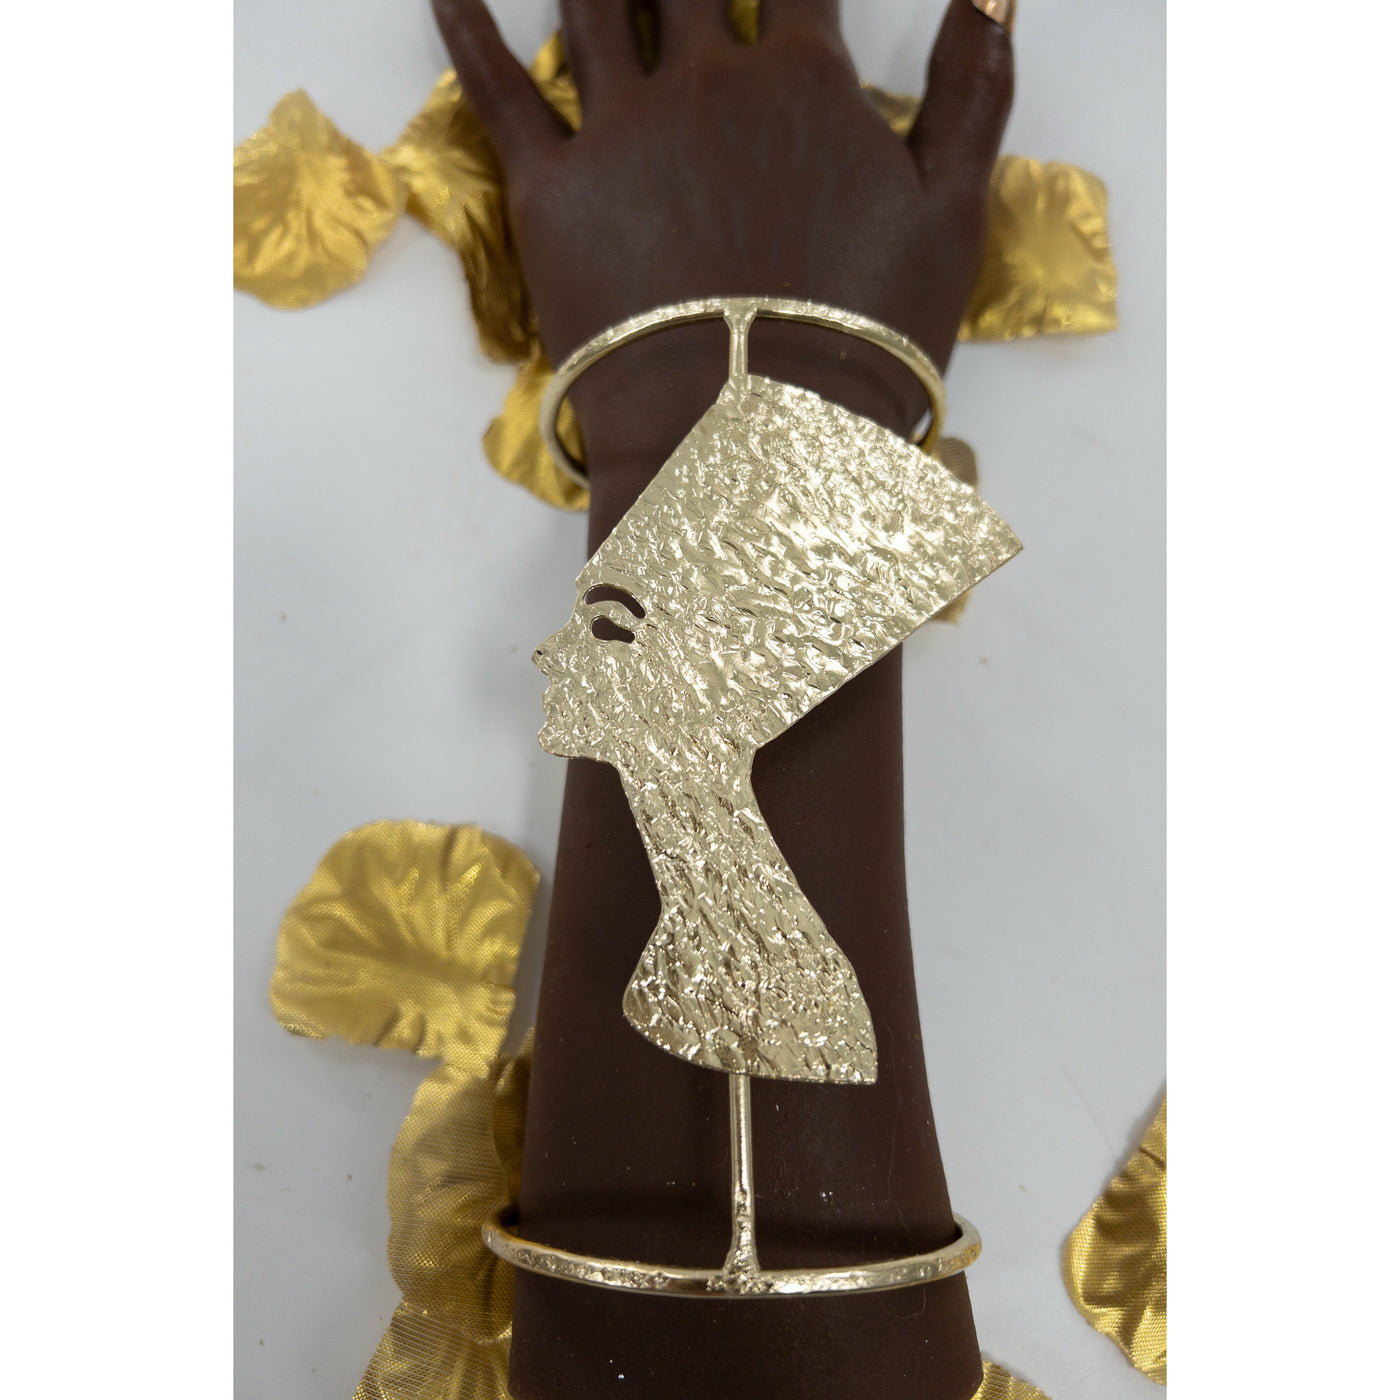 The Queen Nefertiti Statement Bangle/bracelet/ hand cuff